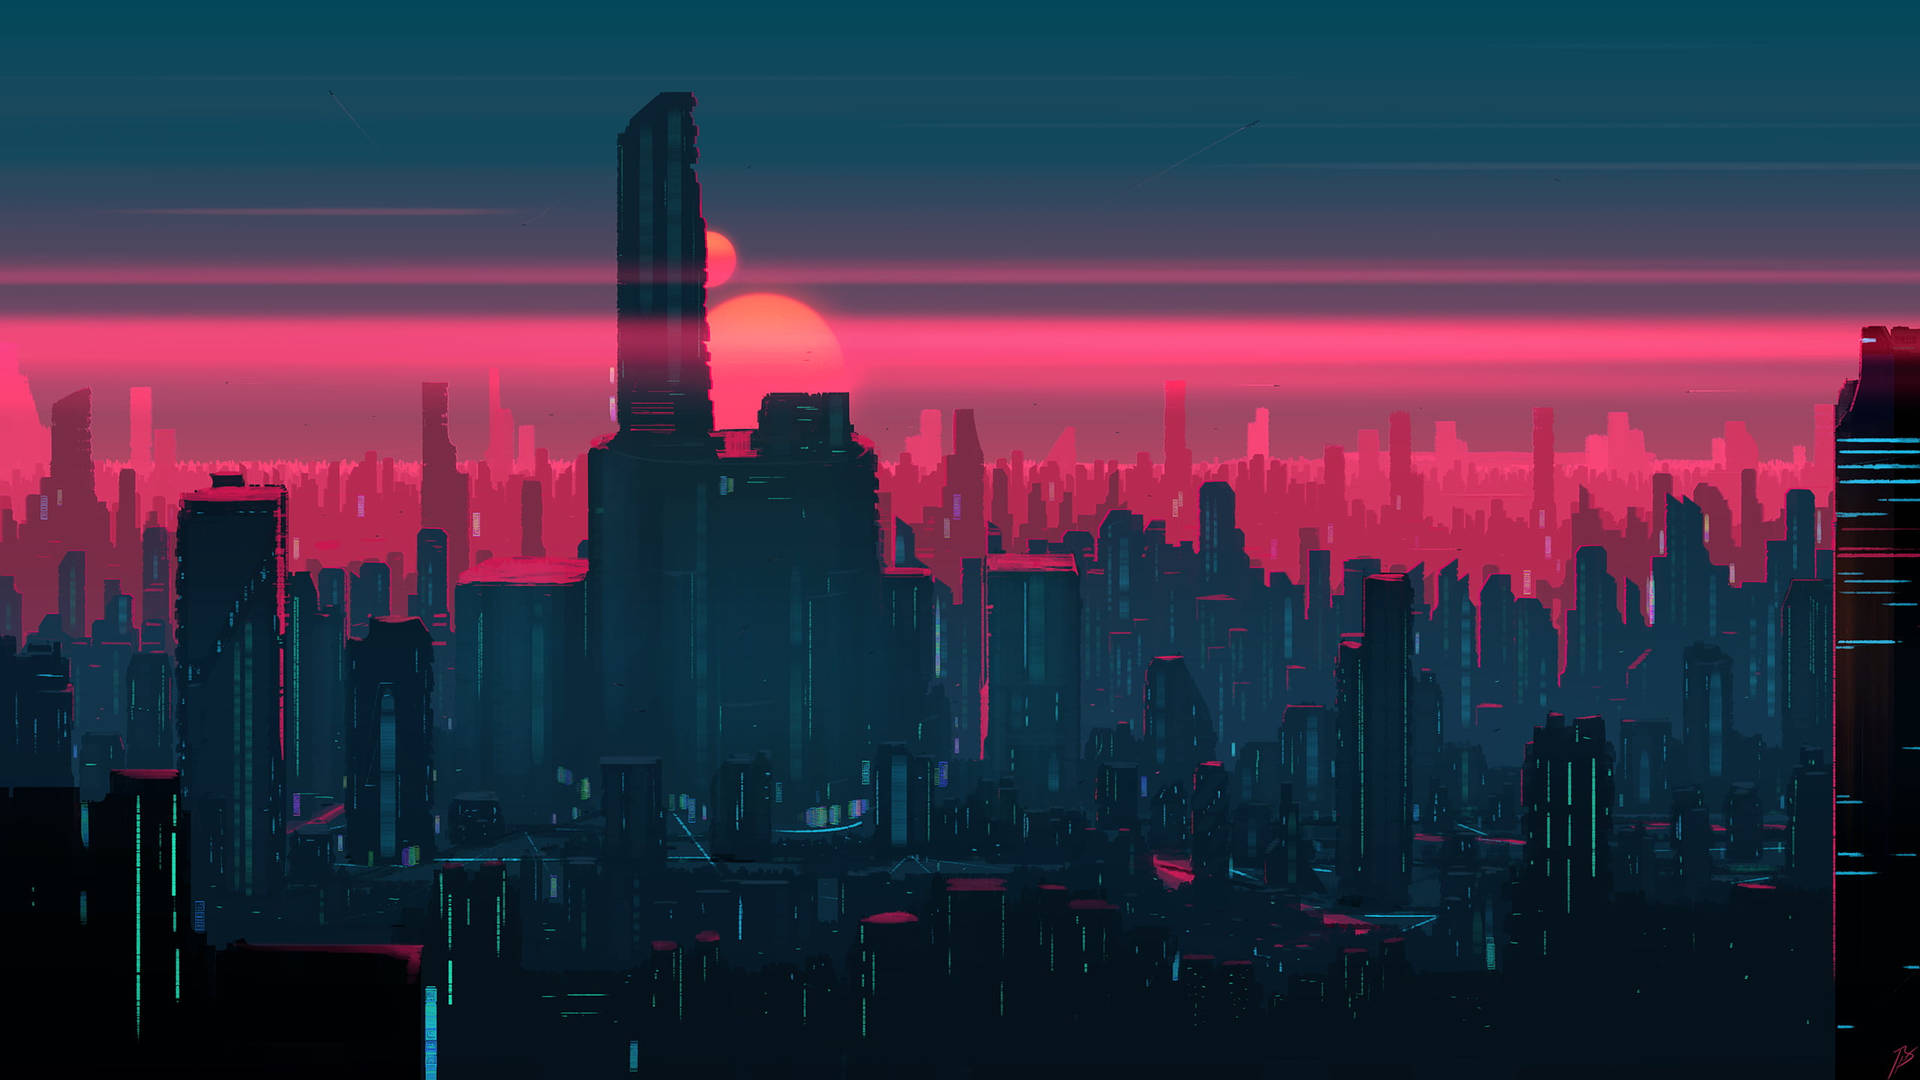 Hd Design Art Of City Sunset Background